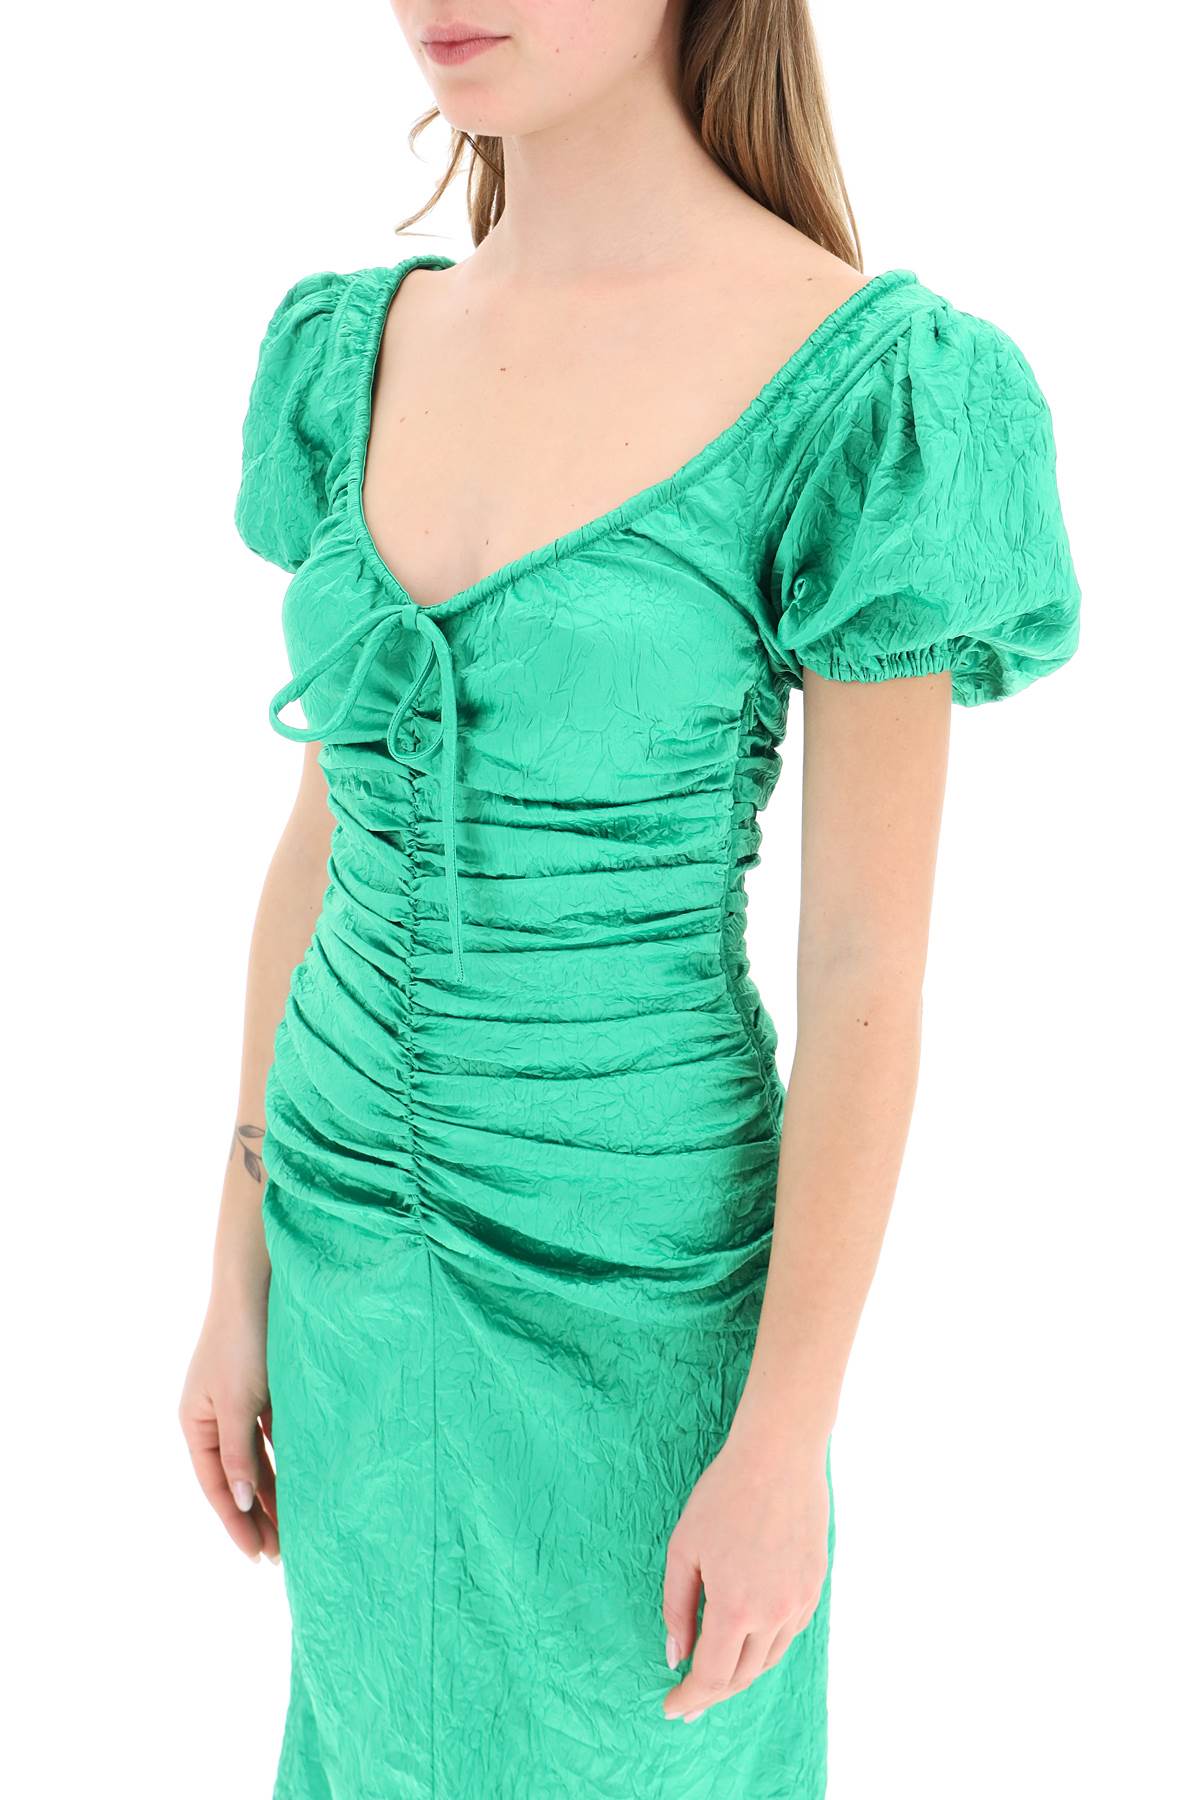 Shop Ganni Crinkle Satin Midi Dress In Bright Green